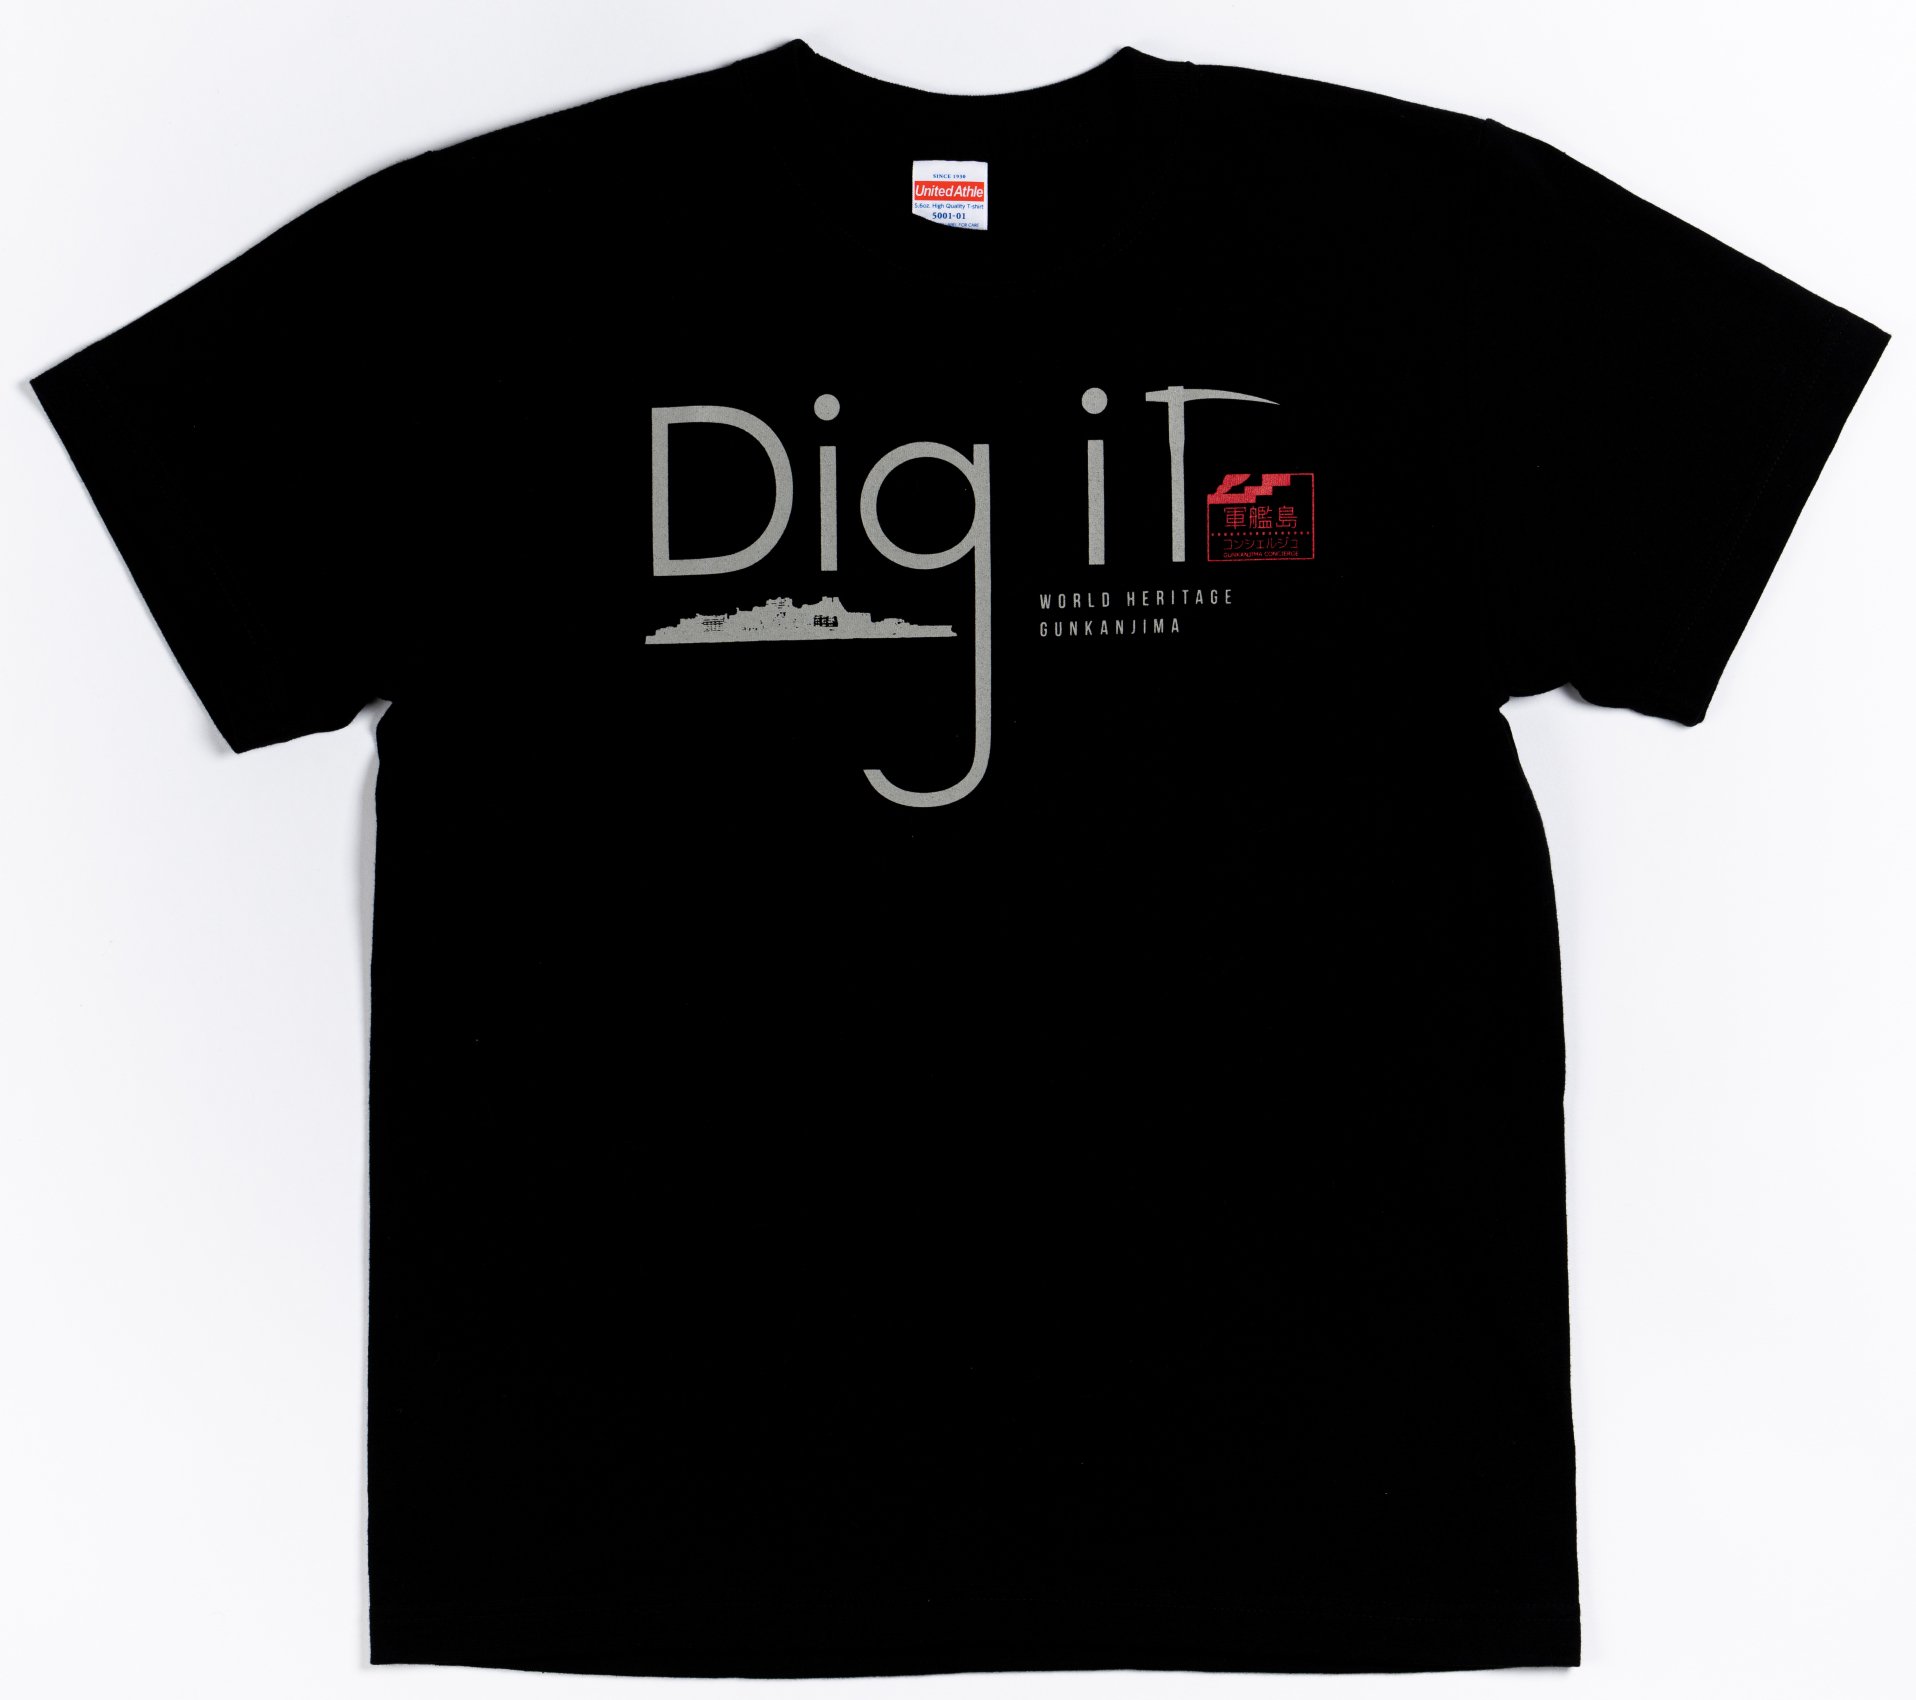 Dig it Tシャツ